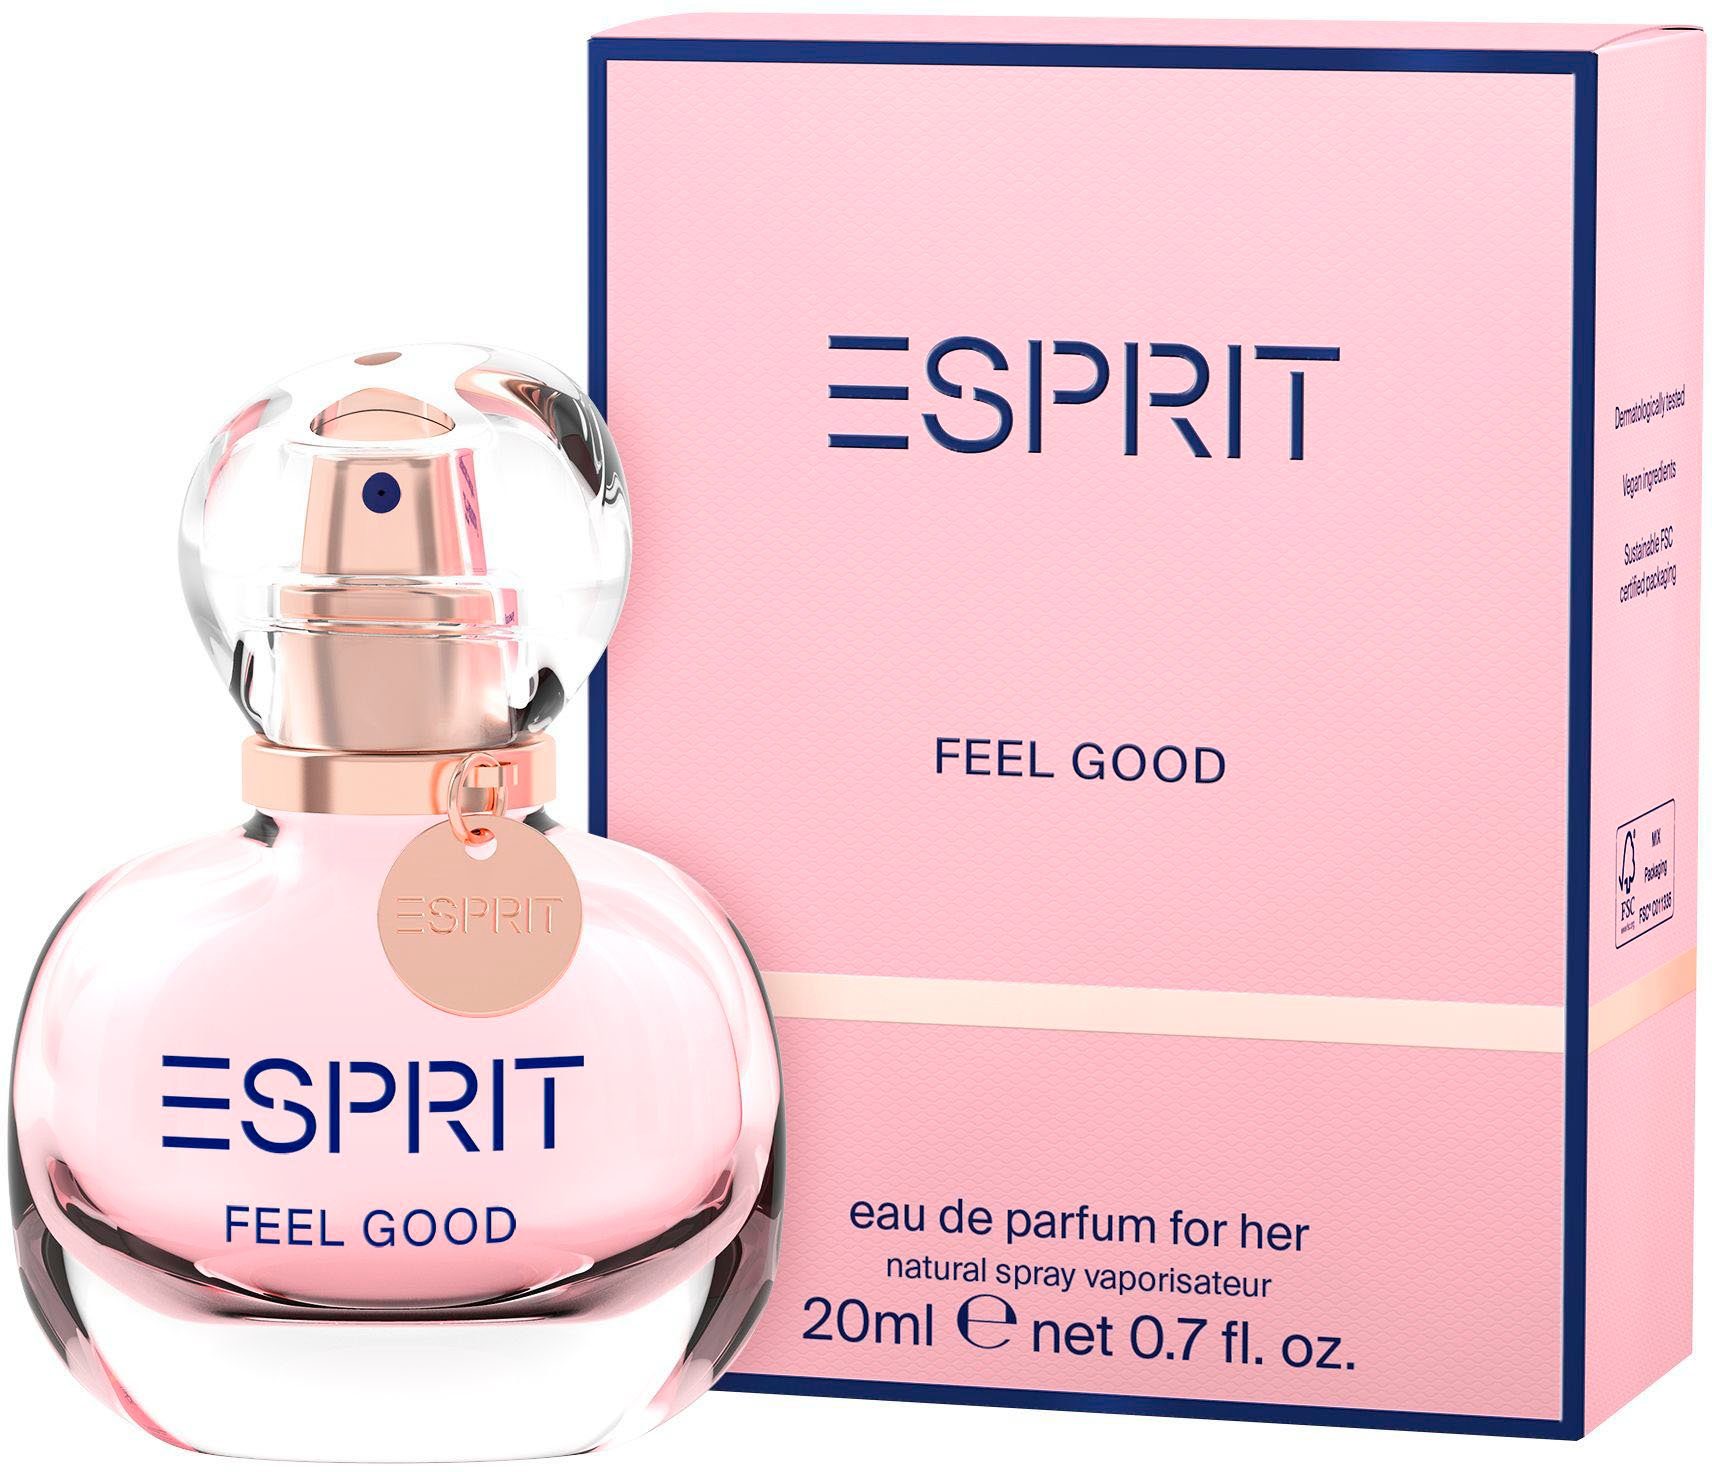 Esprit Eau de FEEL EdP 20 GOOD her ml Parfum for